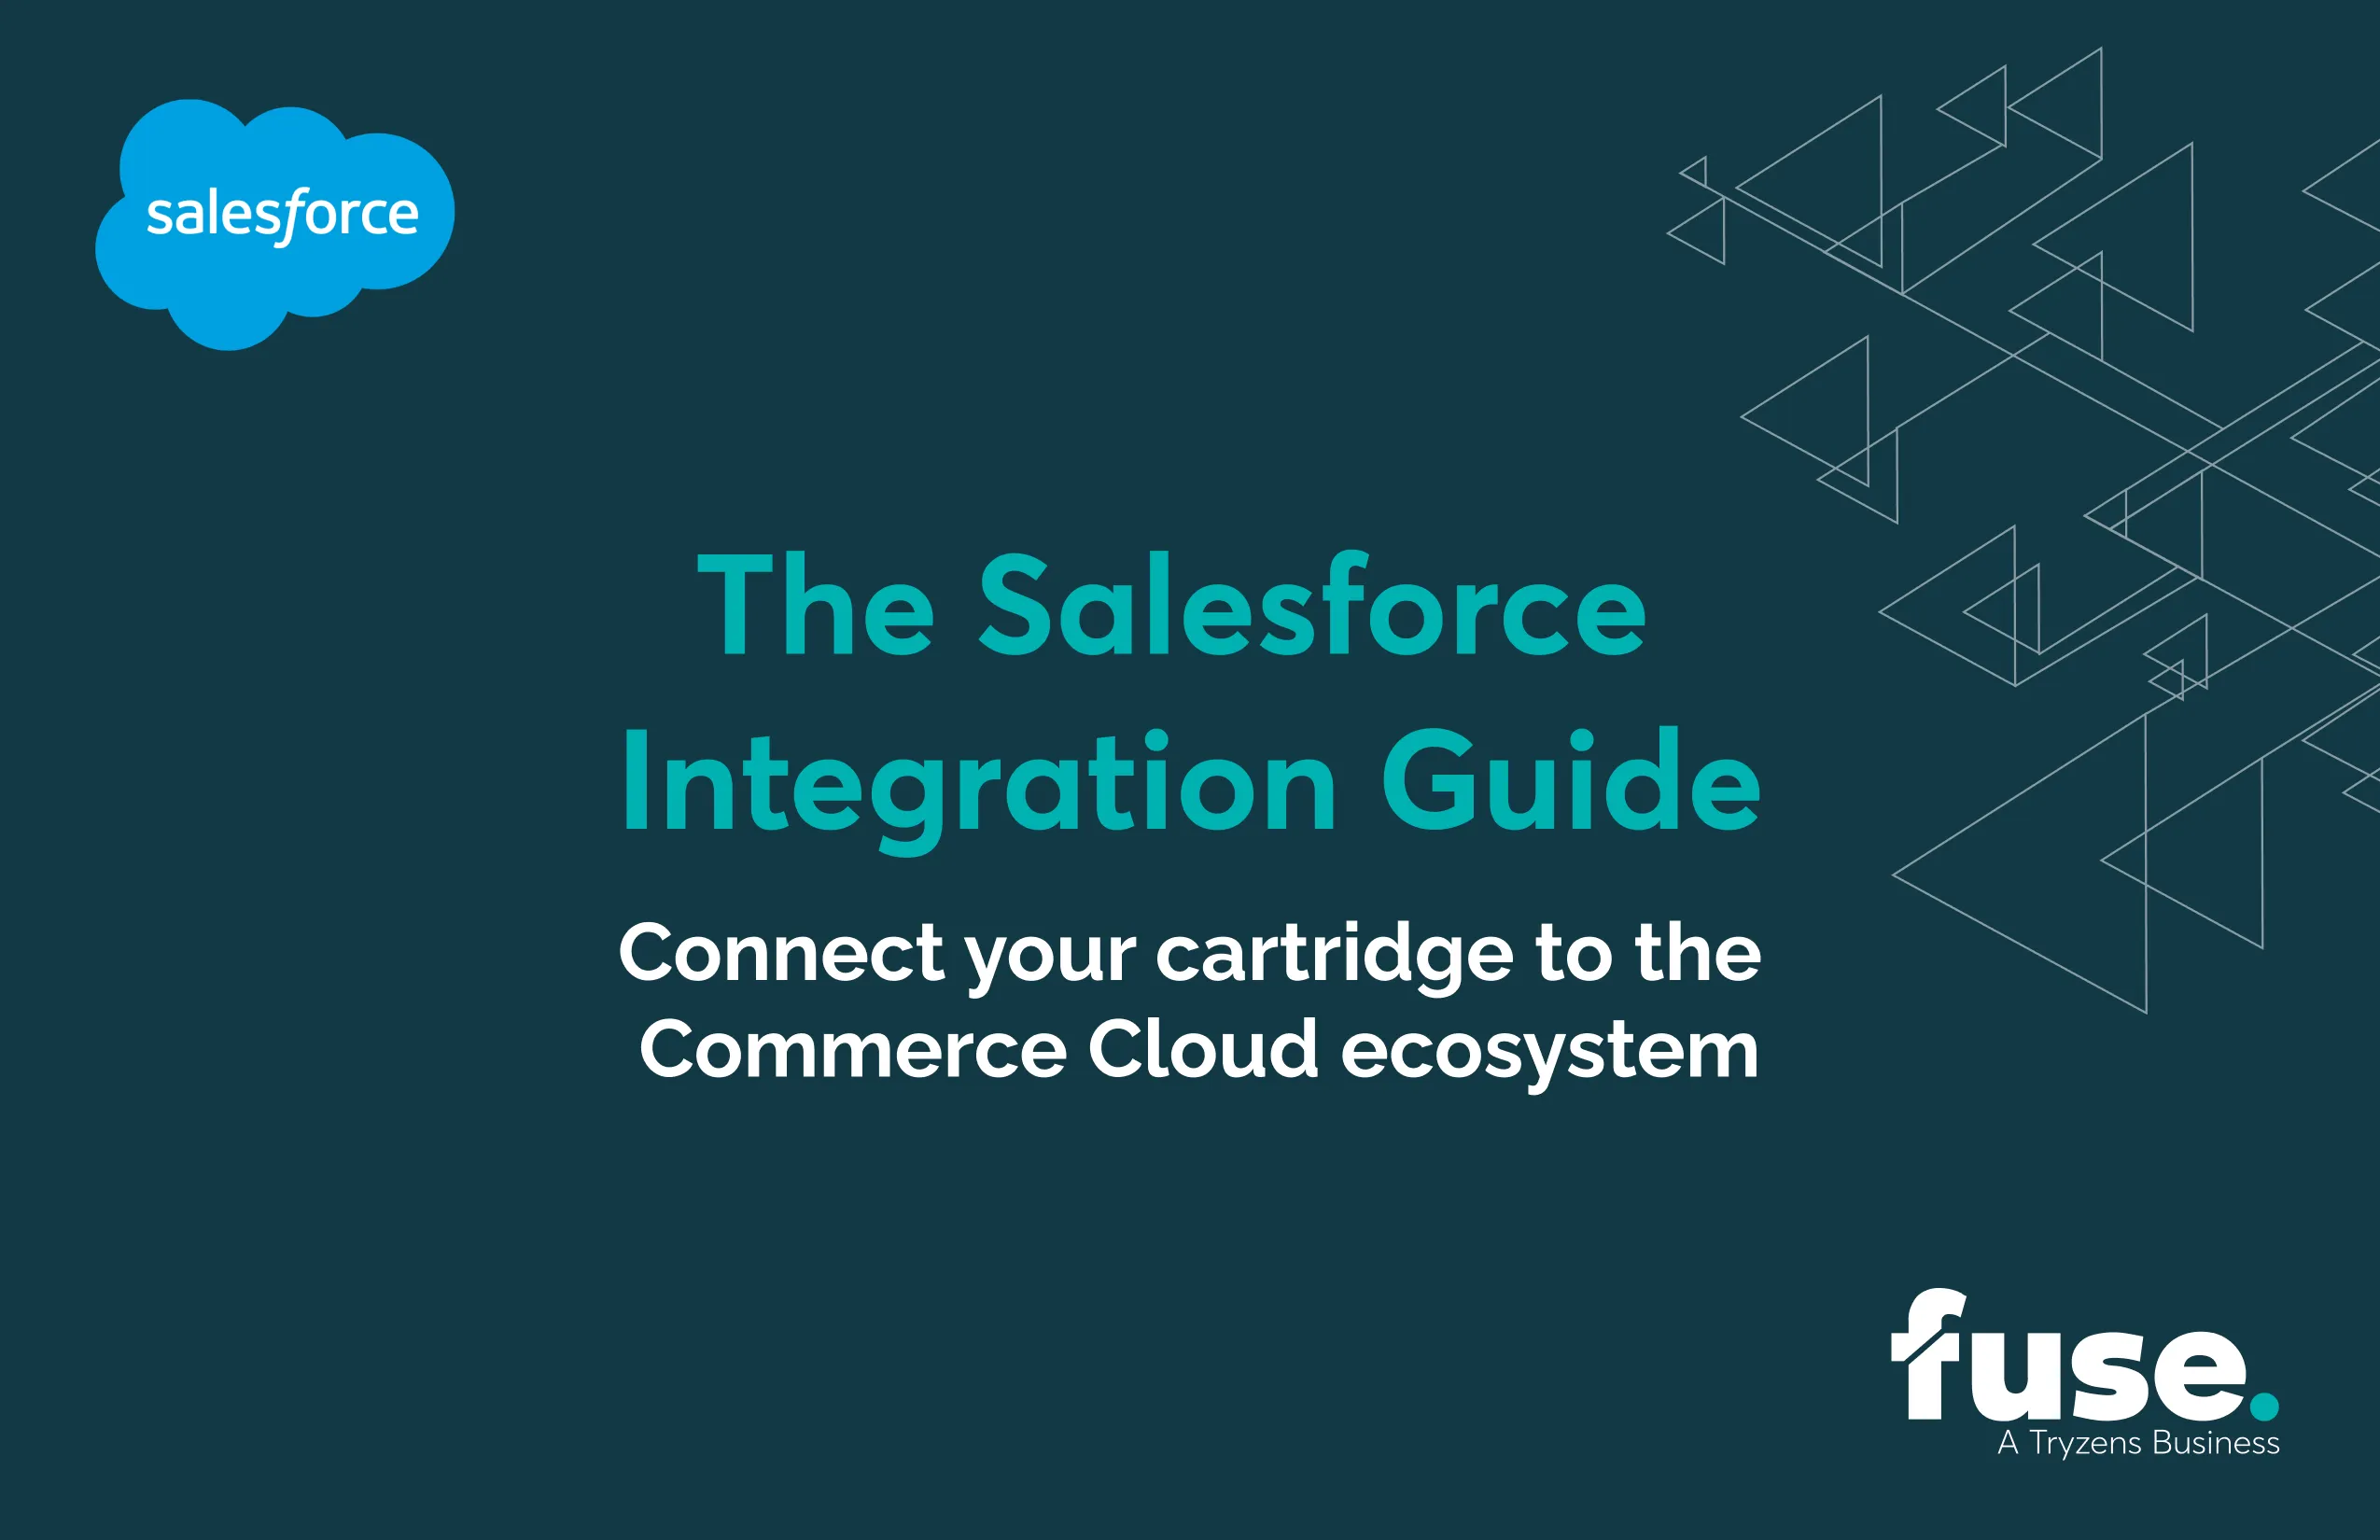 Fuse's Salesforce Integration Guide